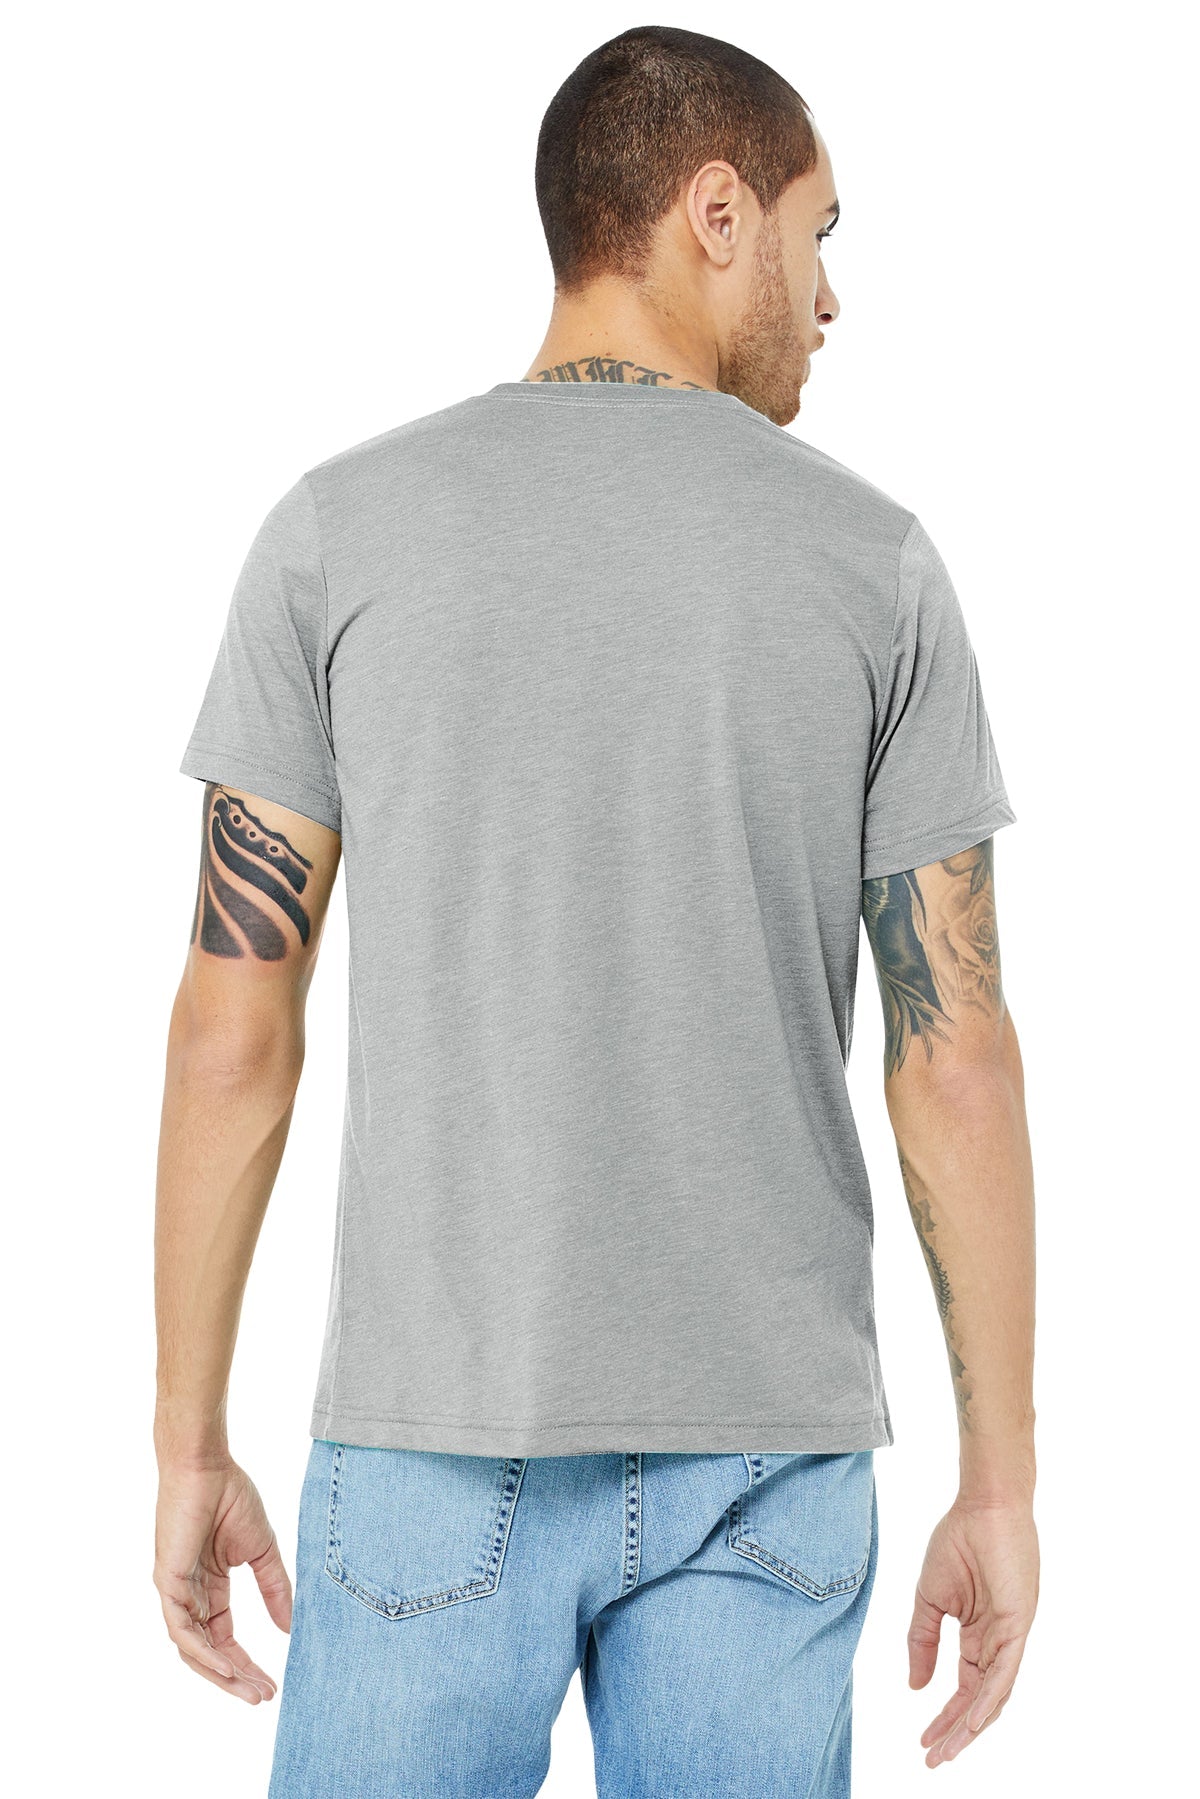 bella + canvas unisex triblend short sleeve t-shirt 3413c ath grey trblnd